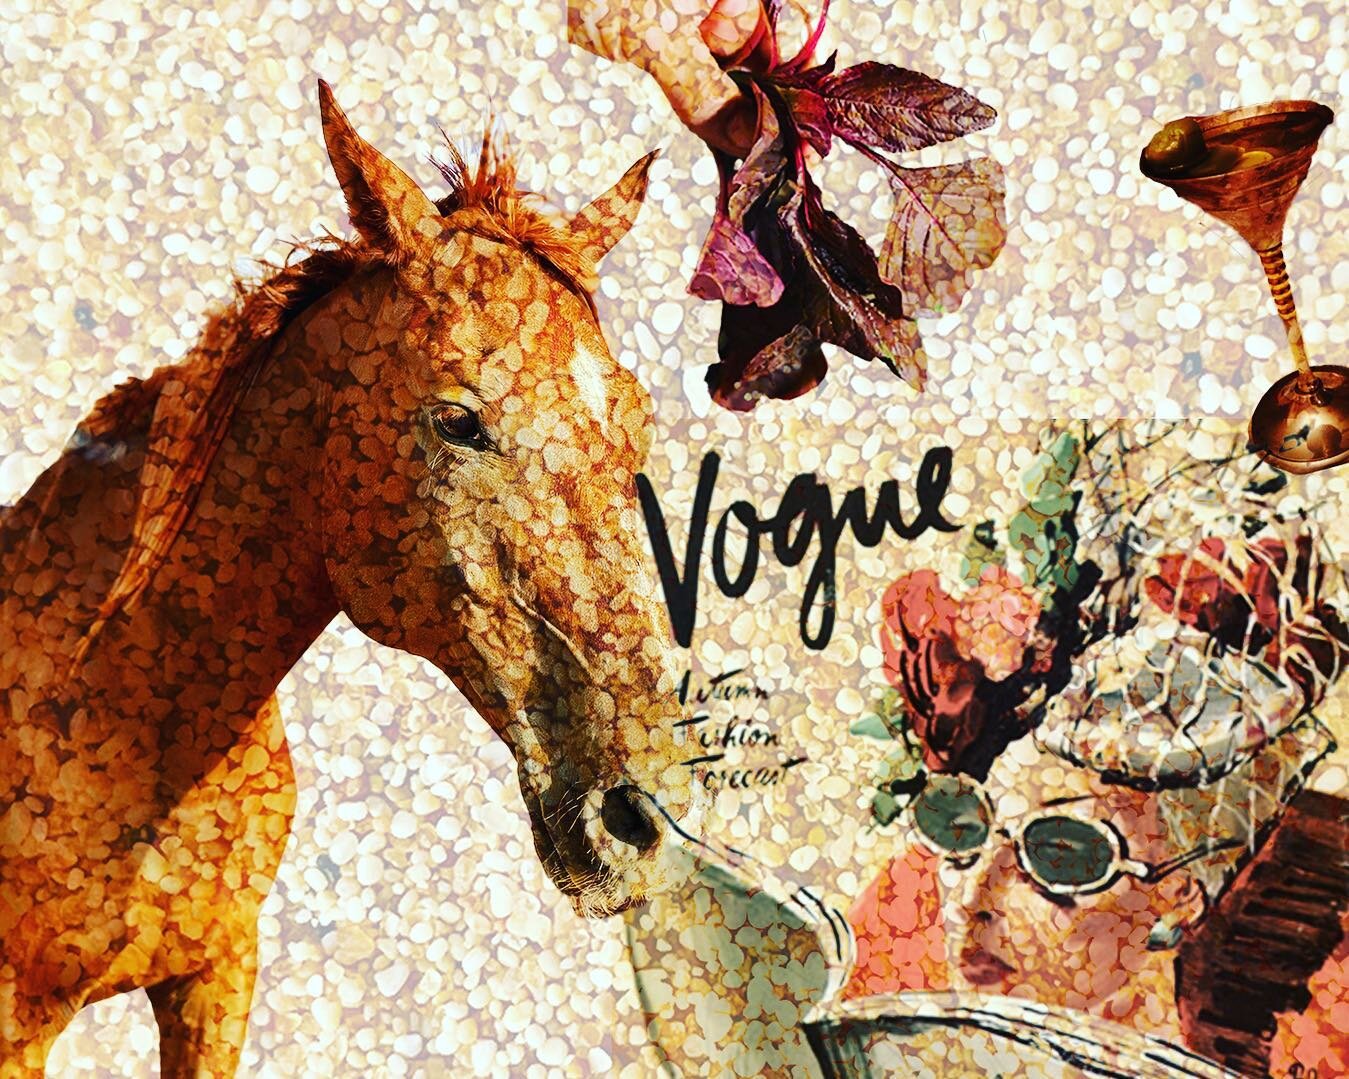 .

Summertime 
2021
Collage

#collageart #summer #horses #vogue #digitalart #voguemagazine